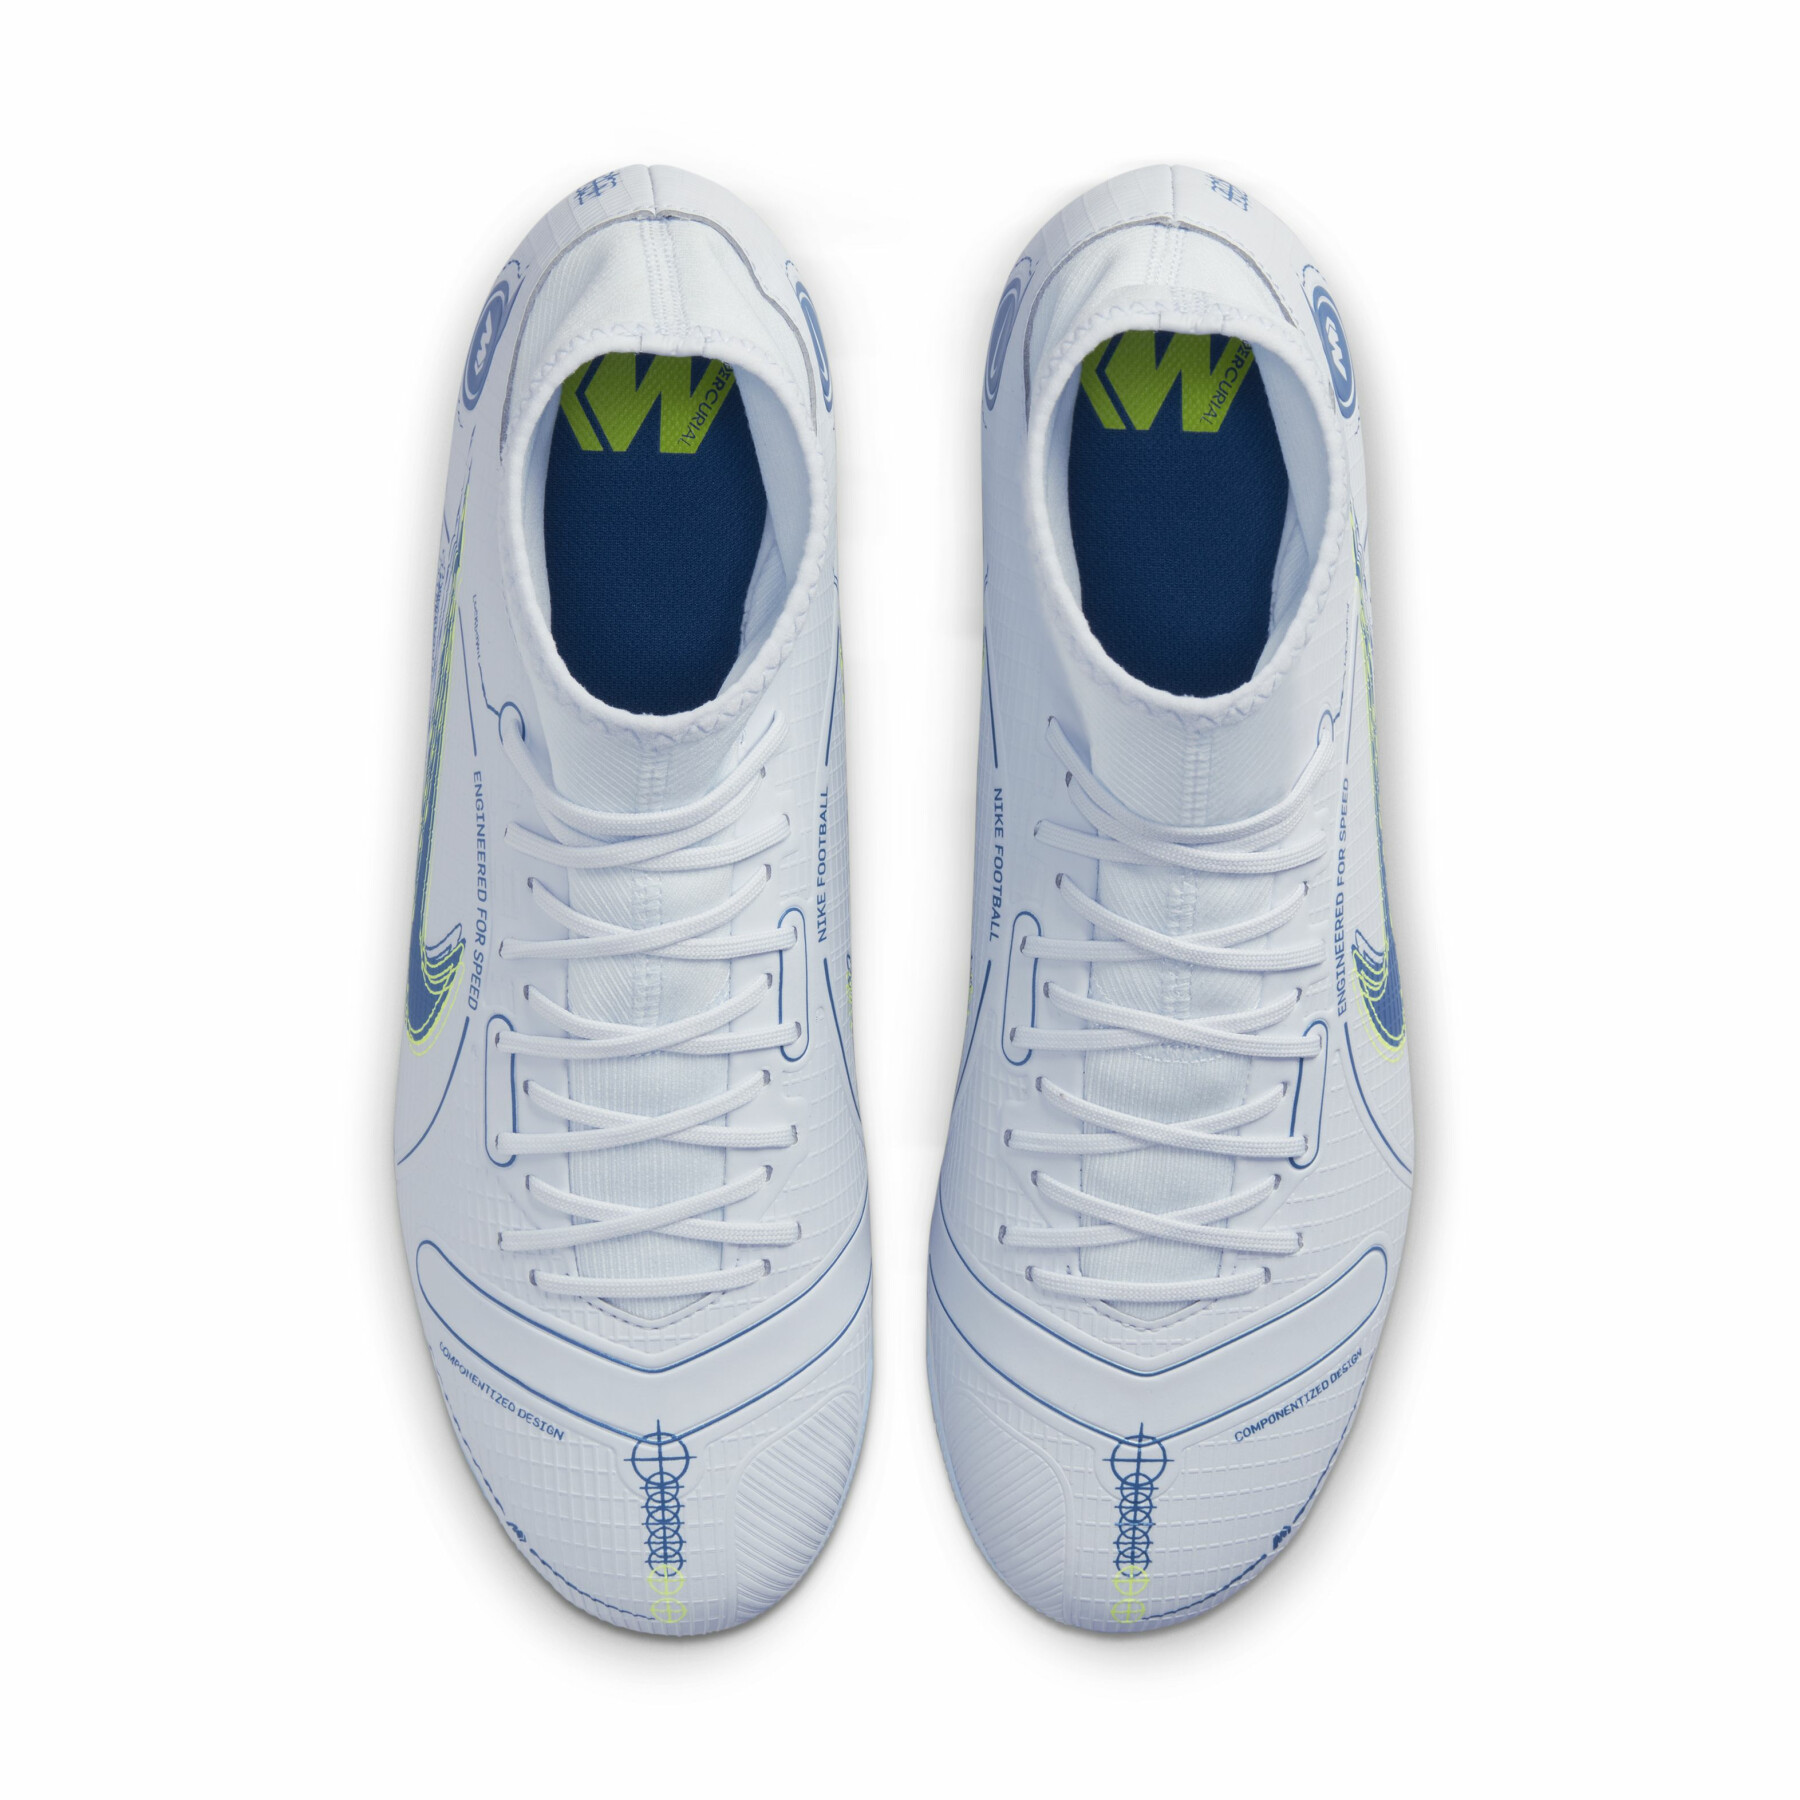 Chaussures de football Nike Mercurial Superfly 8 Academy AG